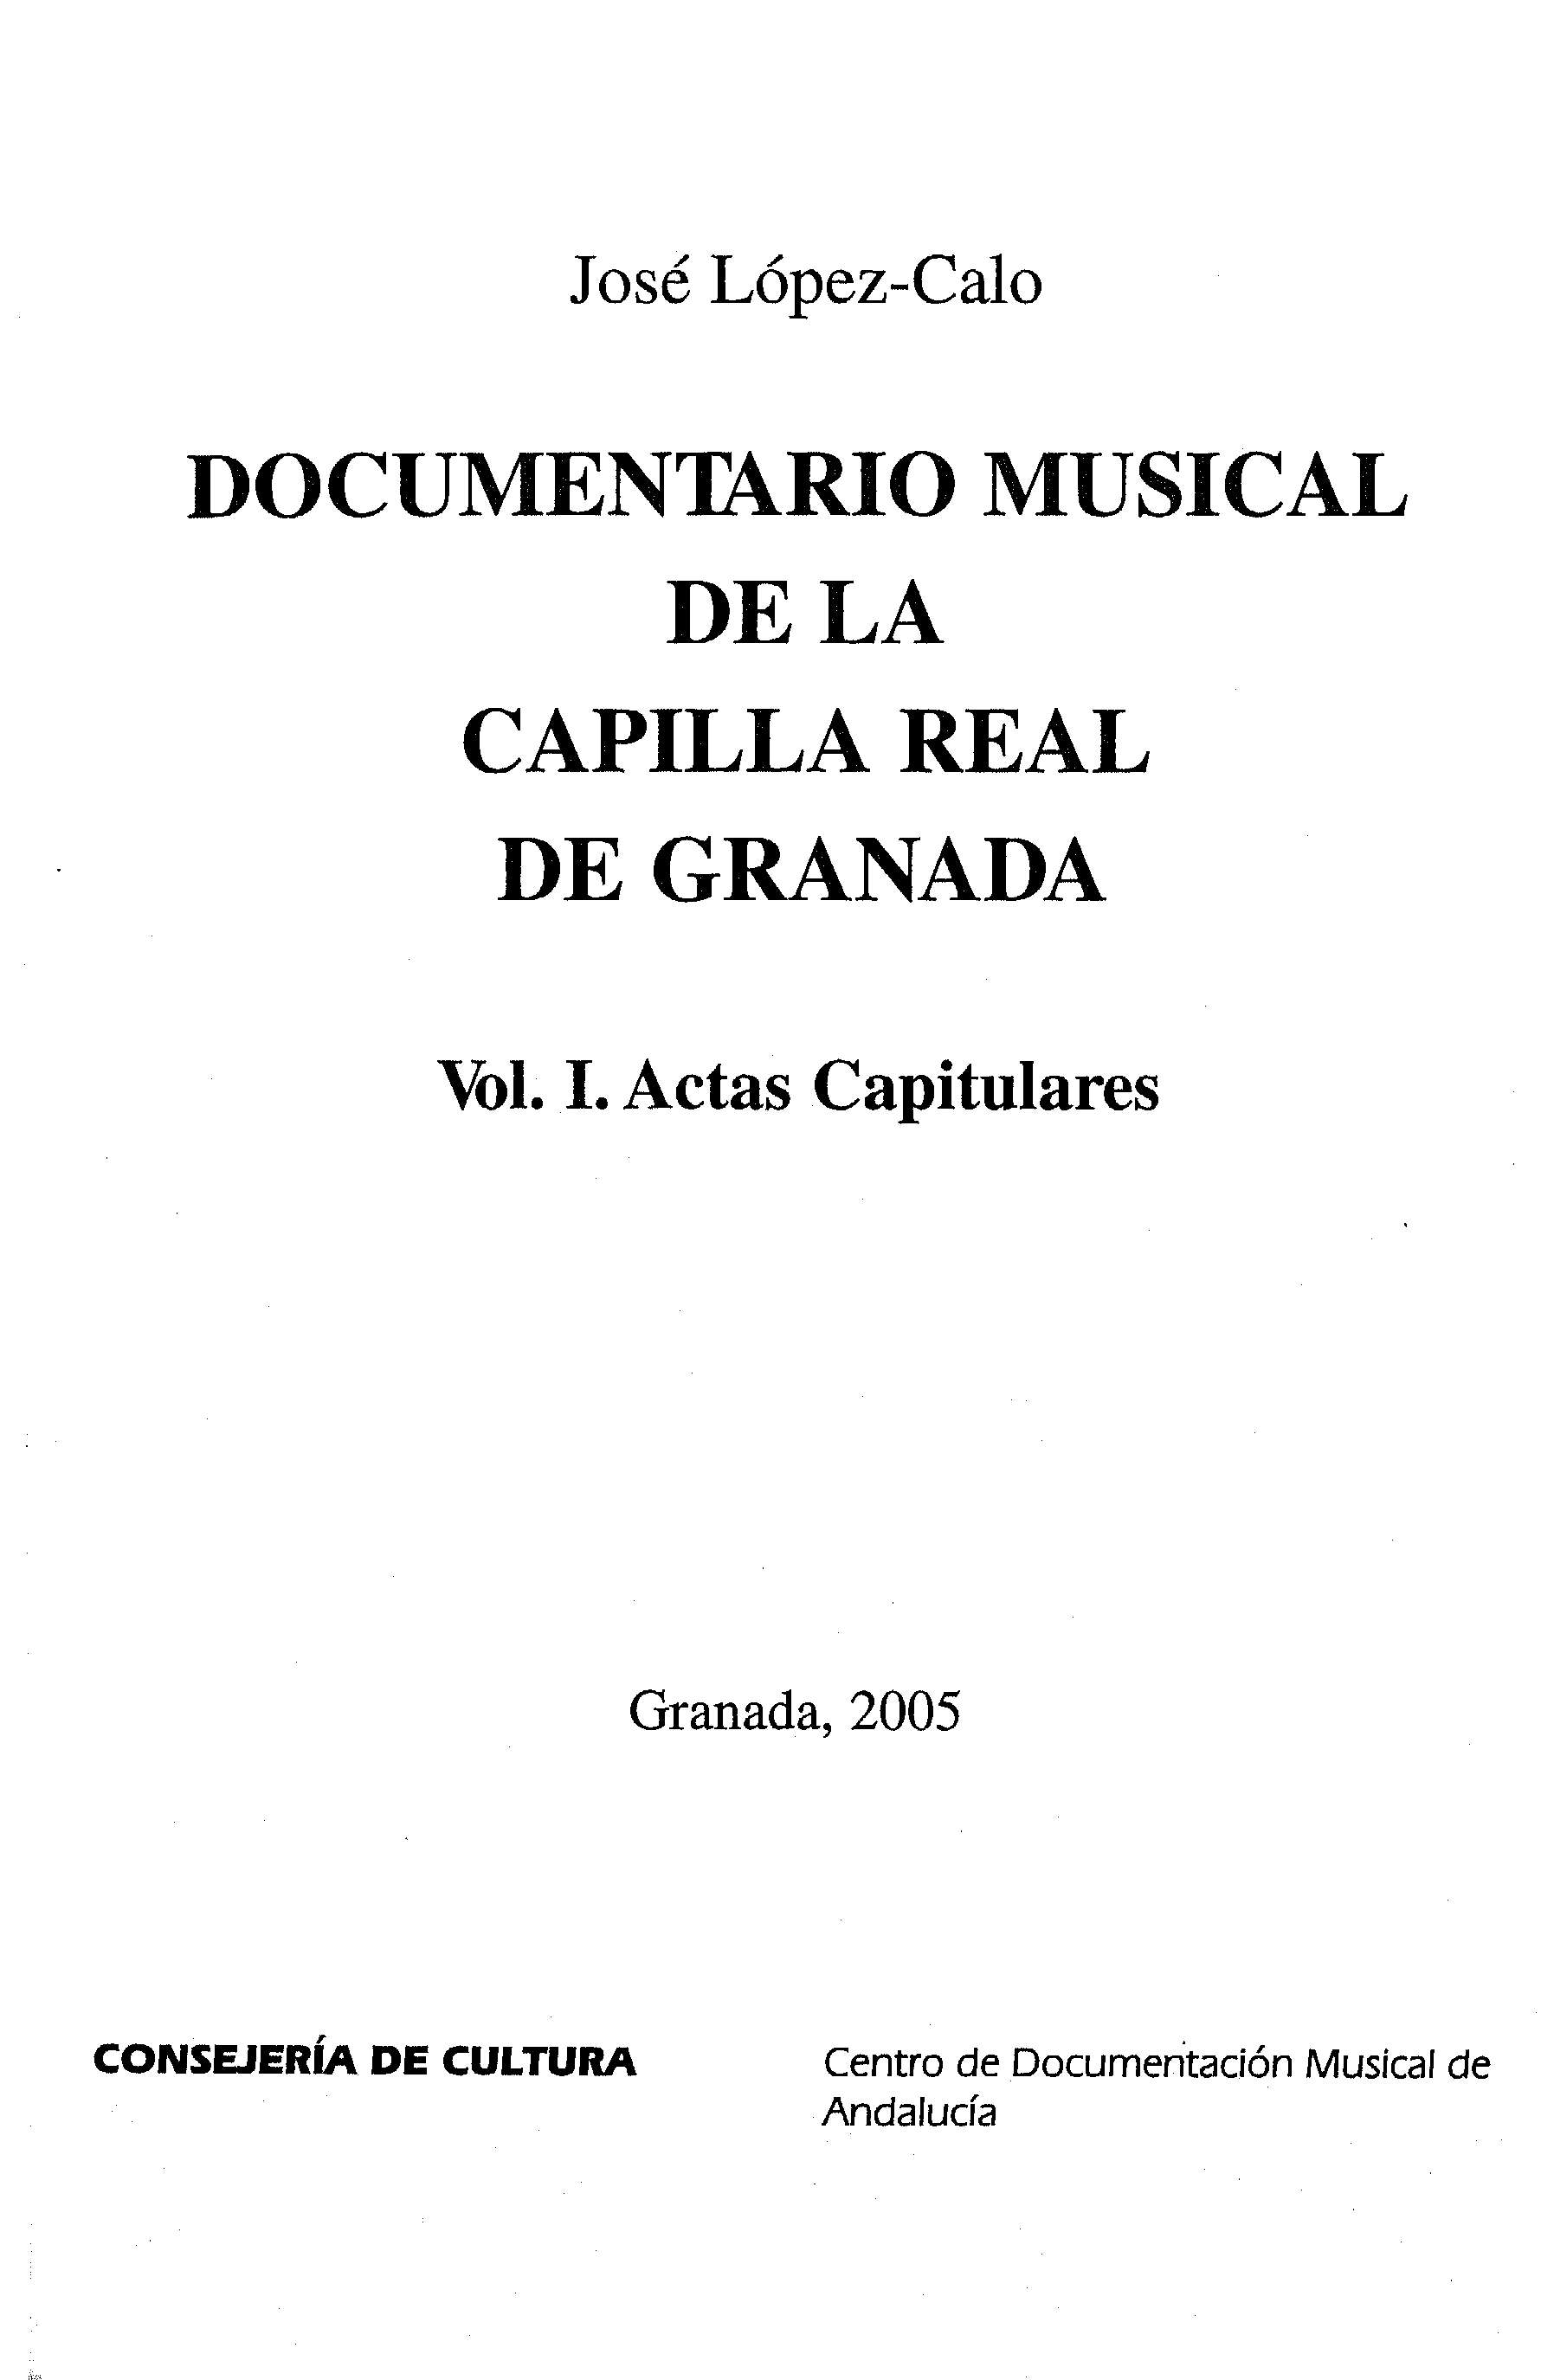 Documentario musical de la Capilla Real de Granada. Vol. I. Actas Capitulares